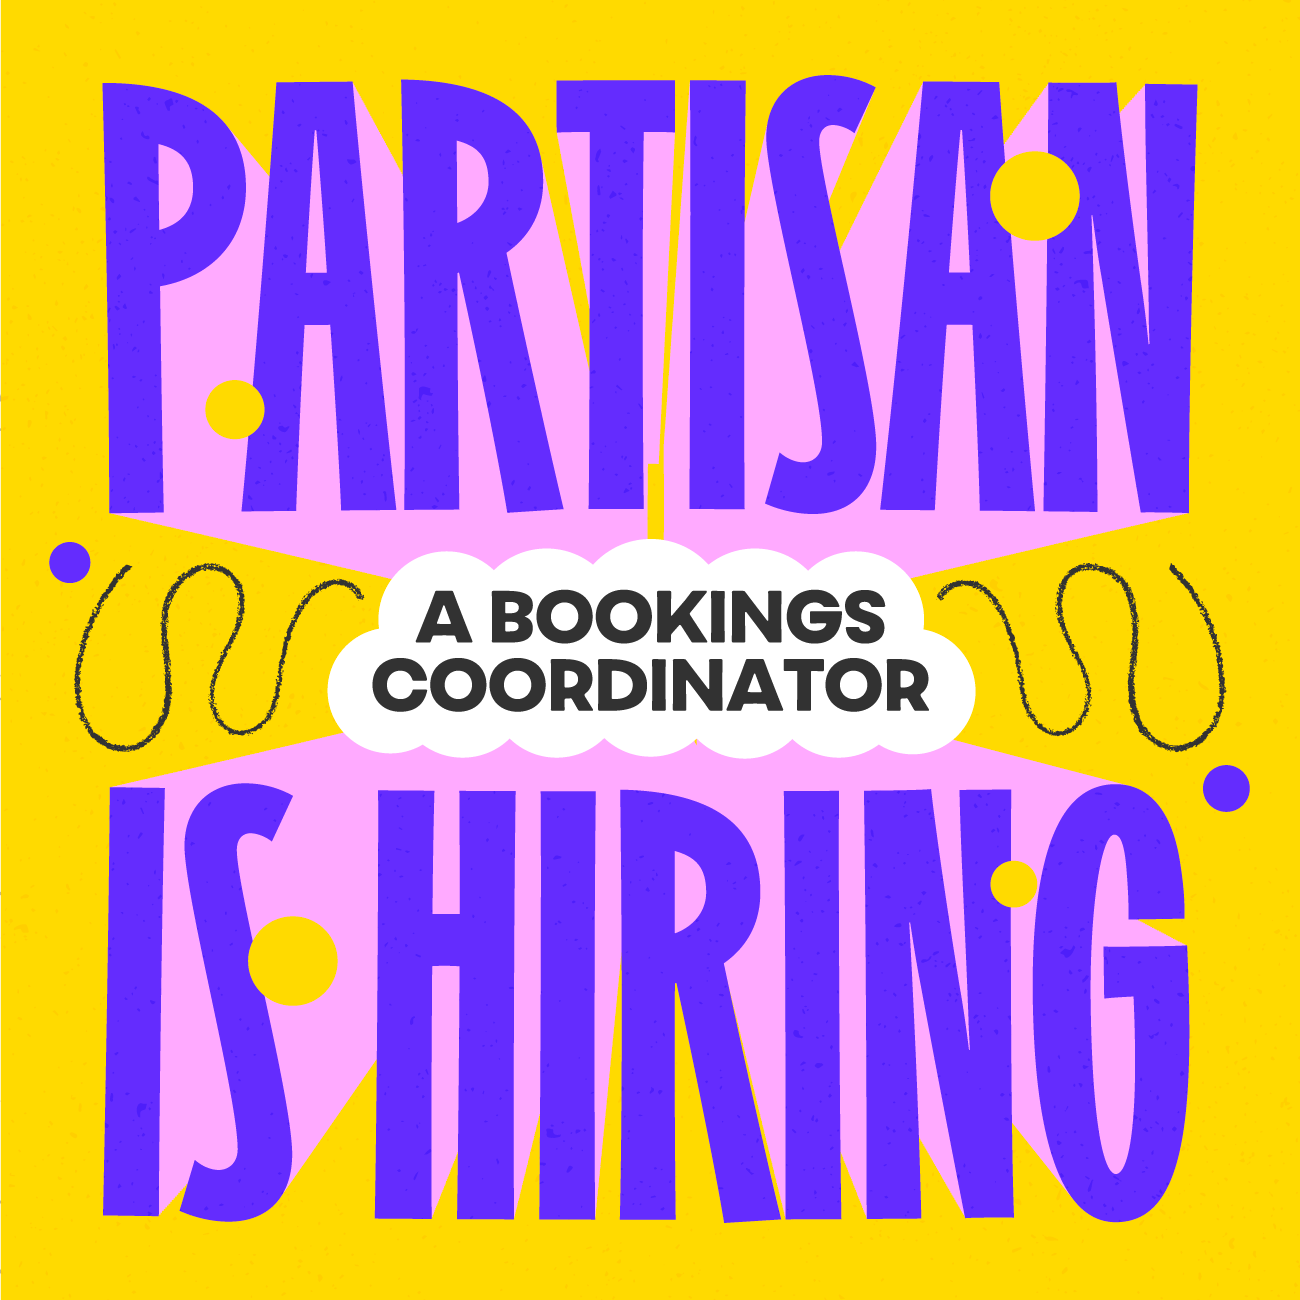 Partisan is hiring a bookings coordinator